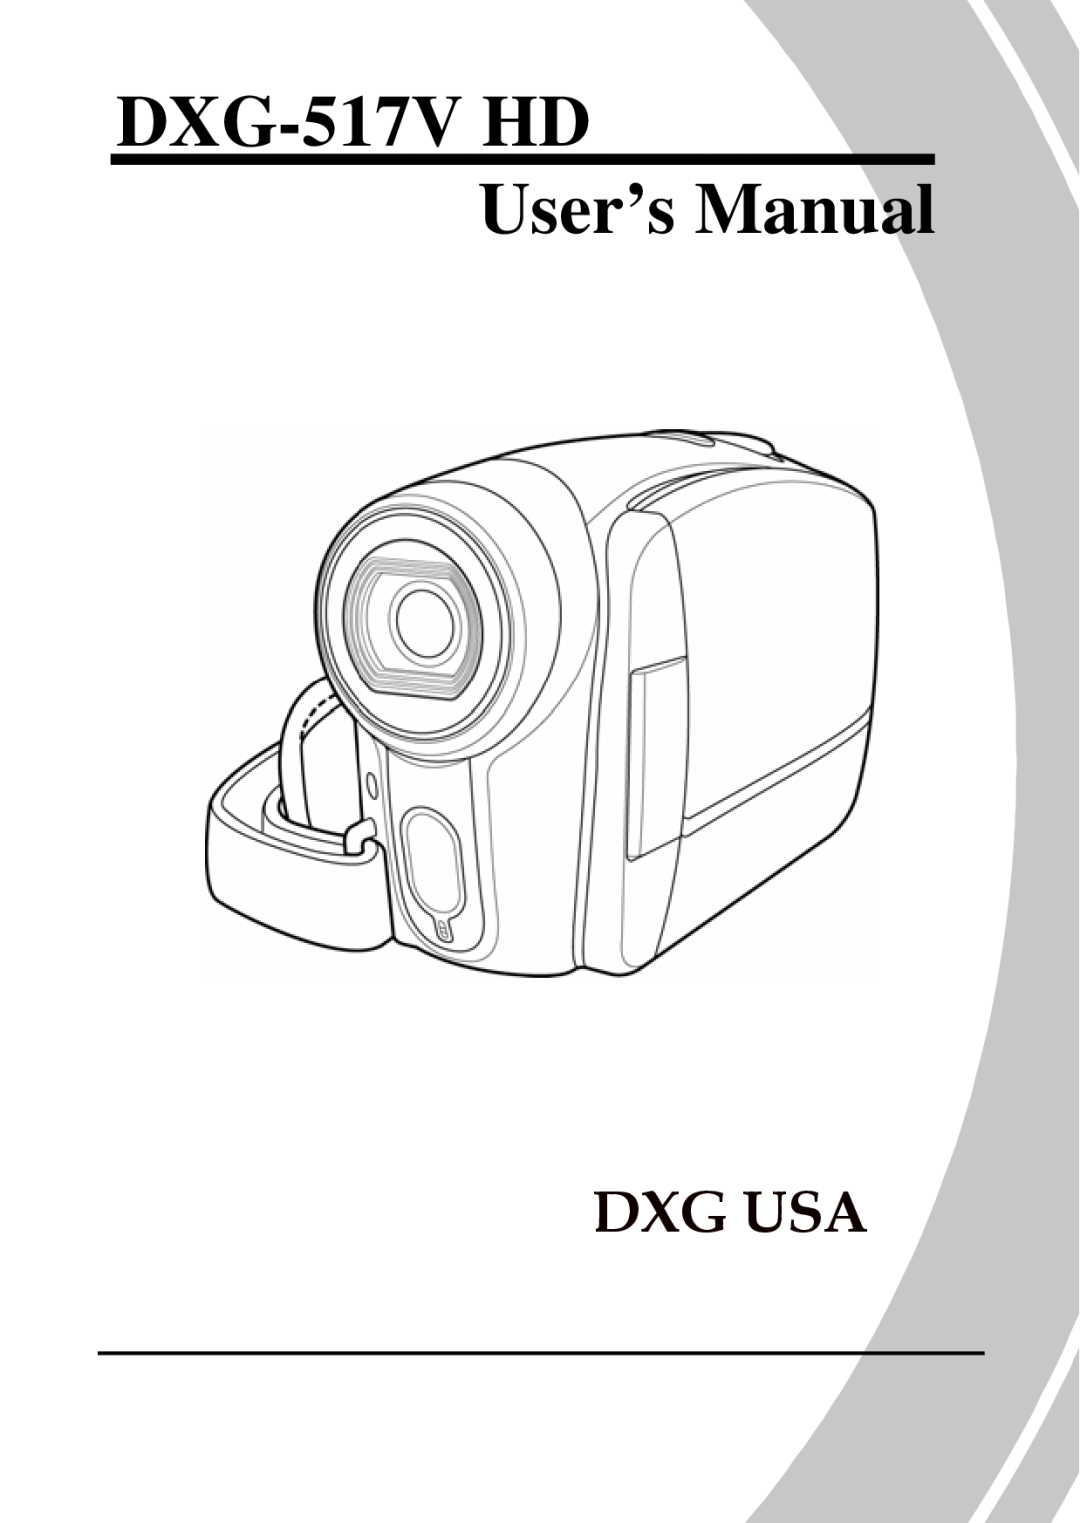 DXG Technology manual DXG-517V HD User’s Manual, Dxg Usa 